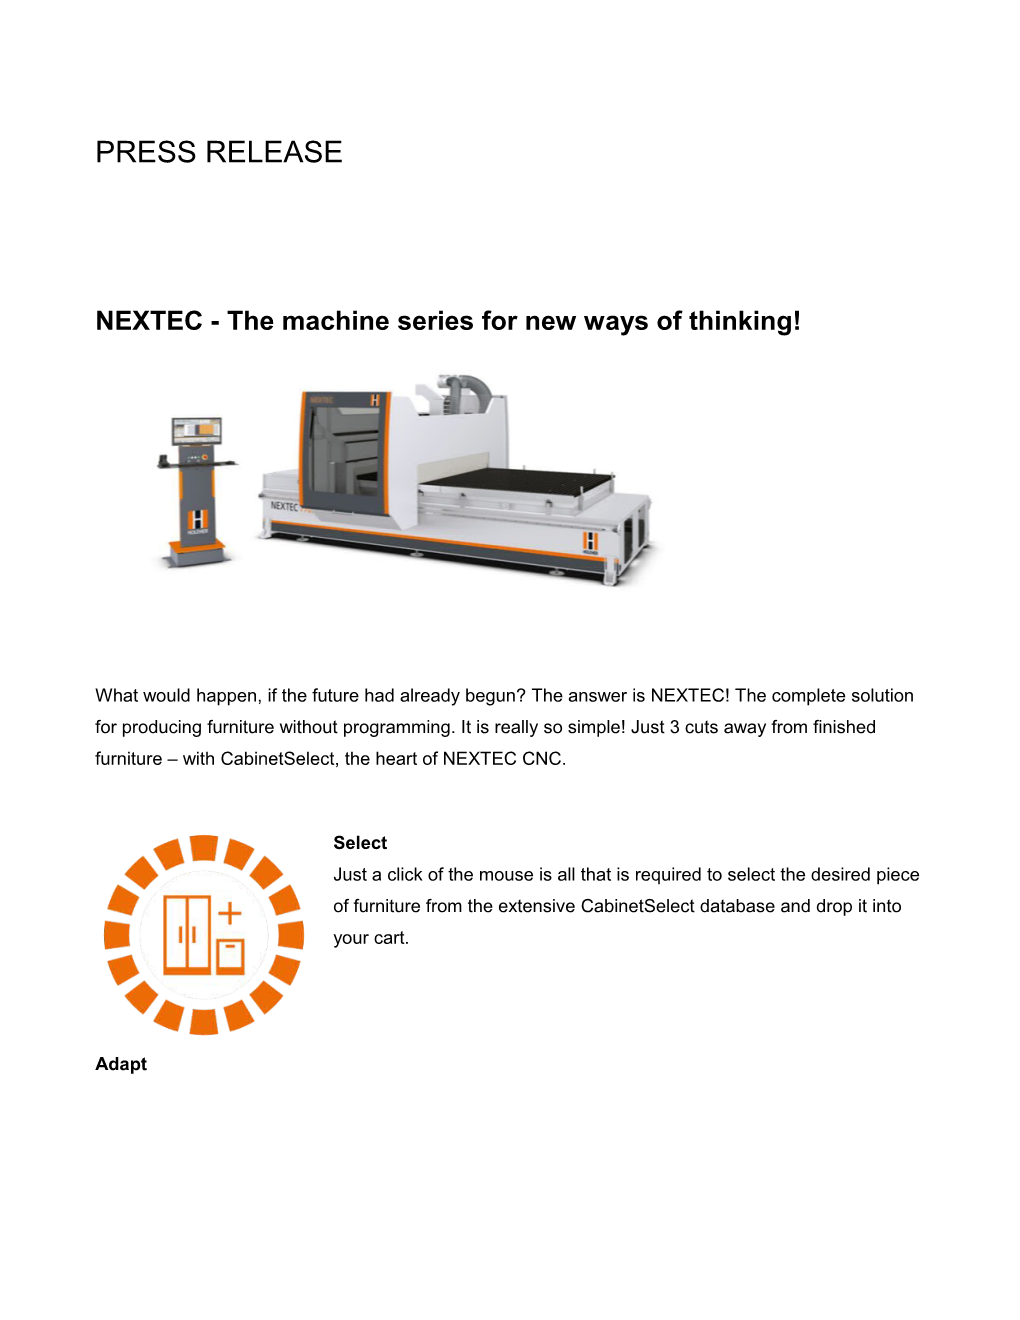 NEXTEC - the Machine Series for New Ways of Thinking!